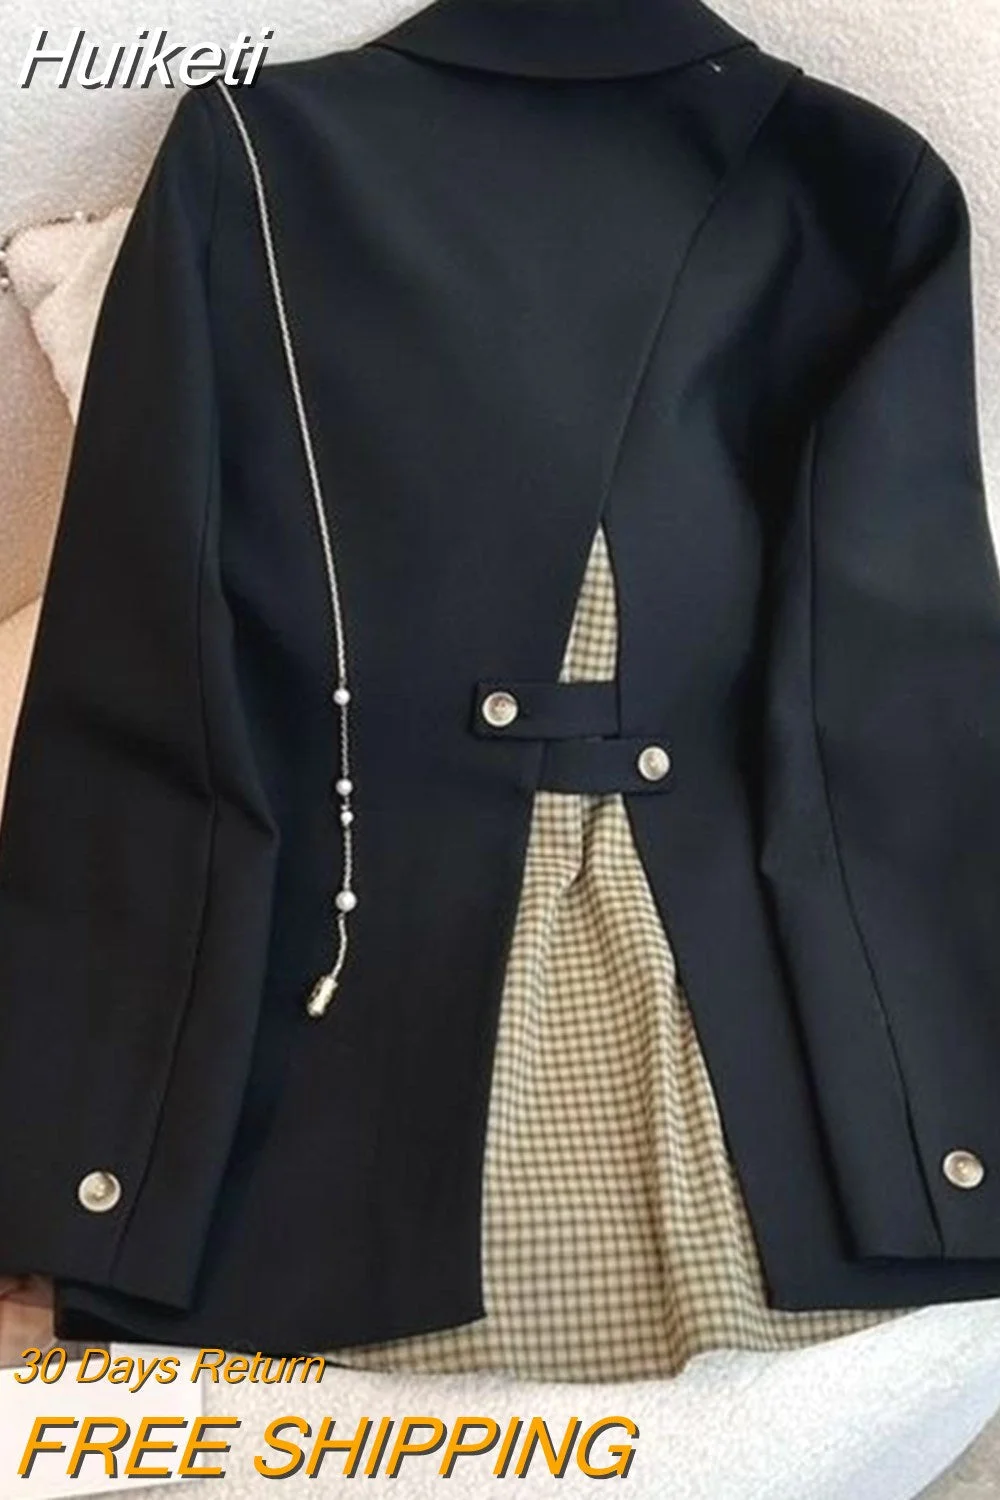 Huiketi Spring Autumn Blazer For Women Fashion Plaid Lining Patchwork Suit Jacket Clothing Casual Long Sleeve Outerwear